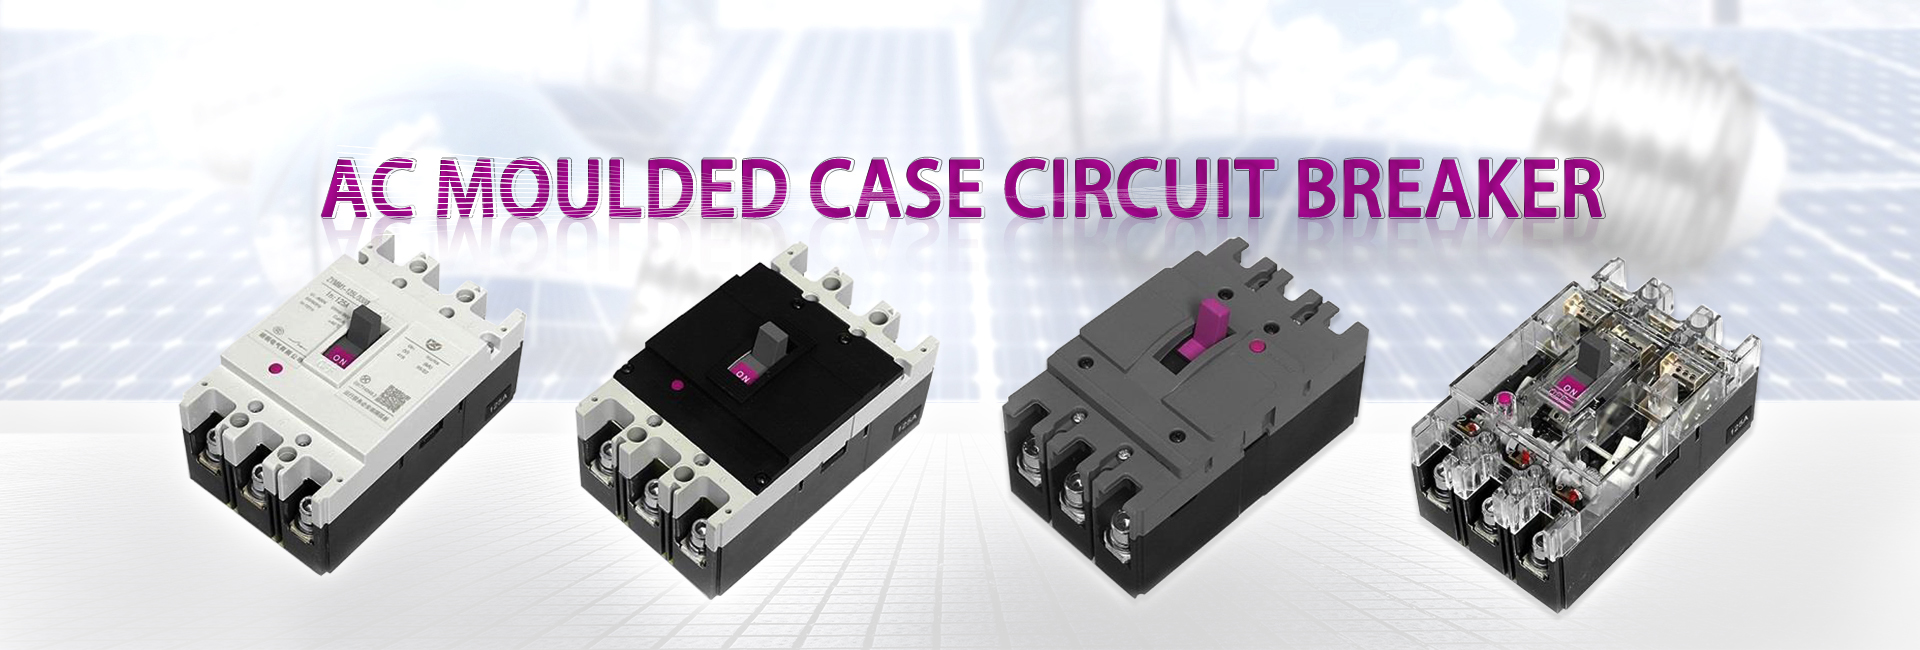 MCCB Rdm5 Series Moulded Case Circuit Breaker CE CB factory